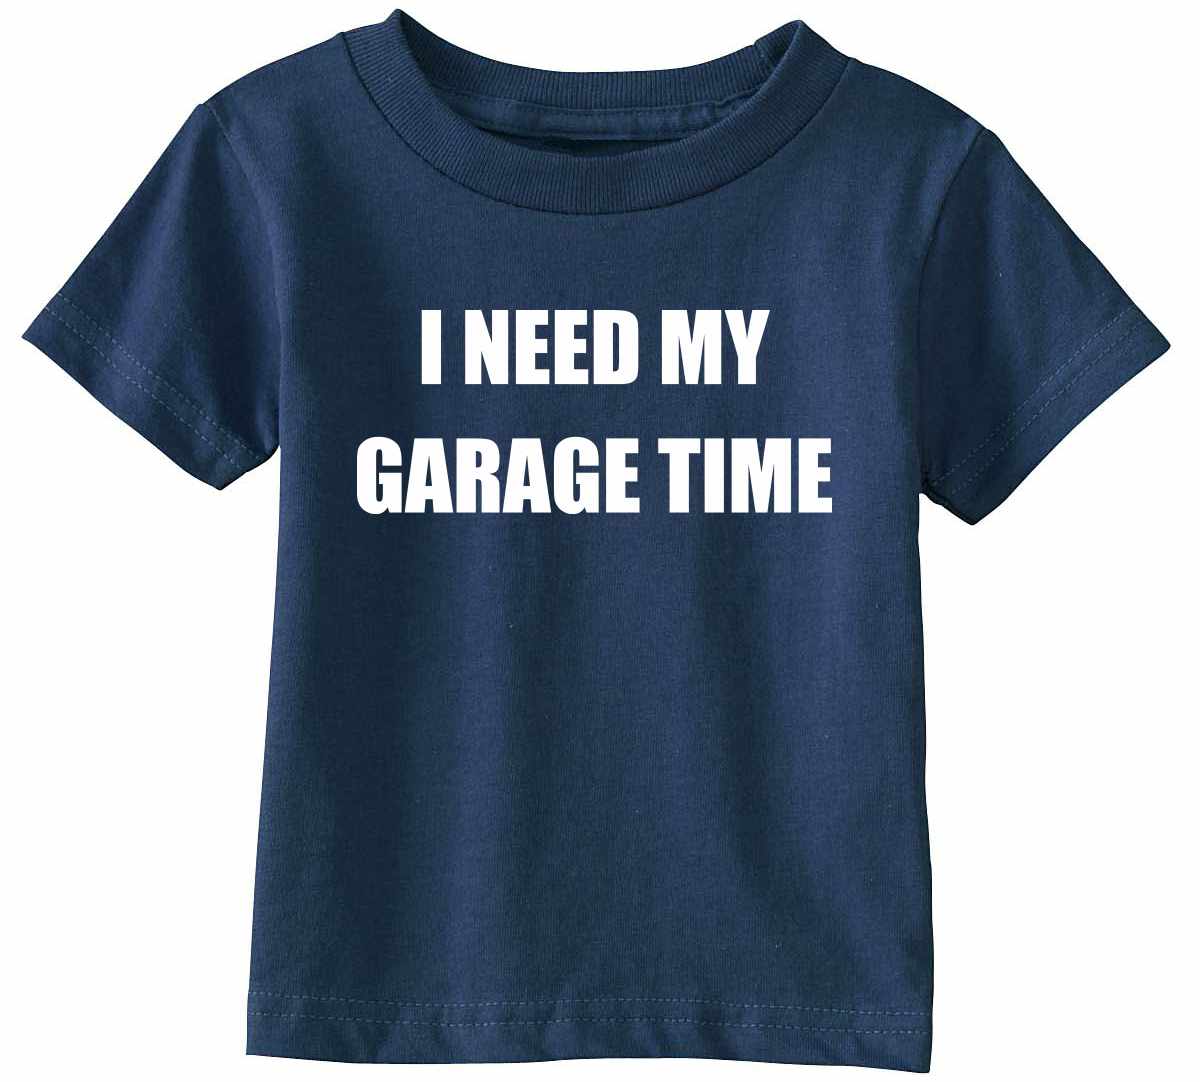 I NEED MY GARAGE TIME Infant/Toddler  (#720-7)